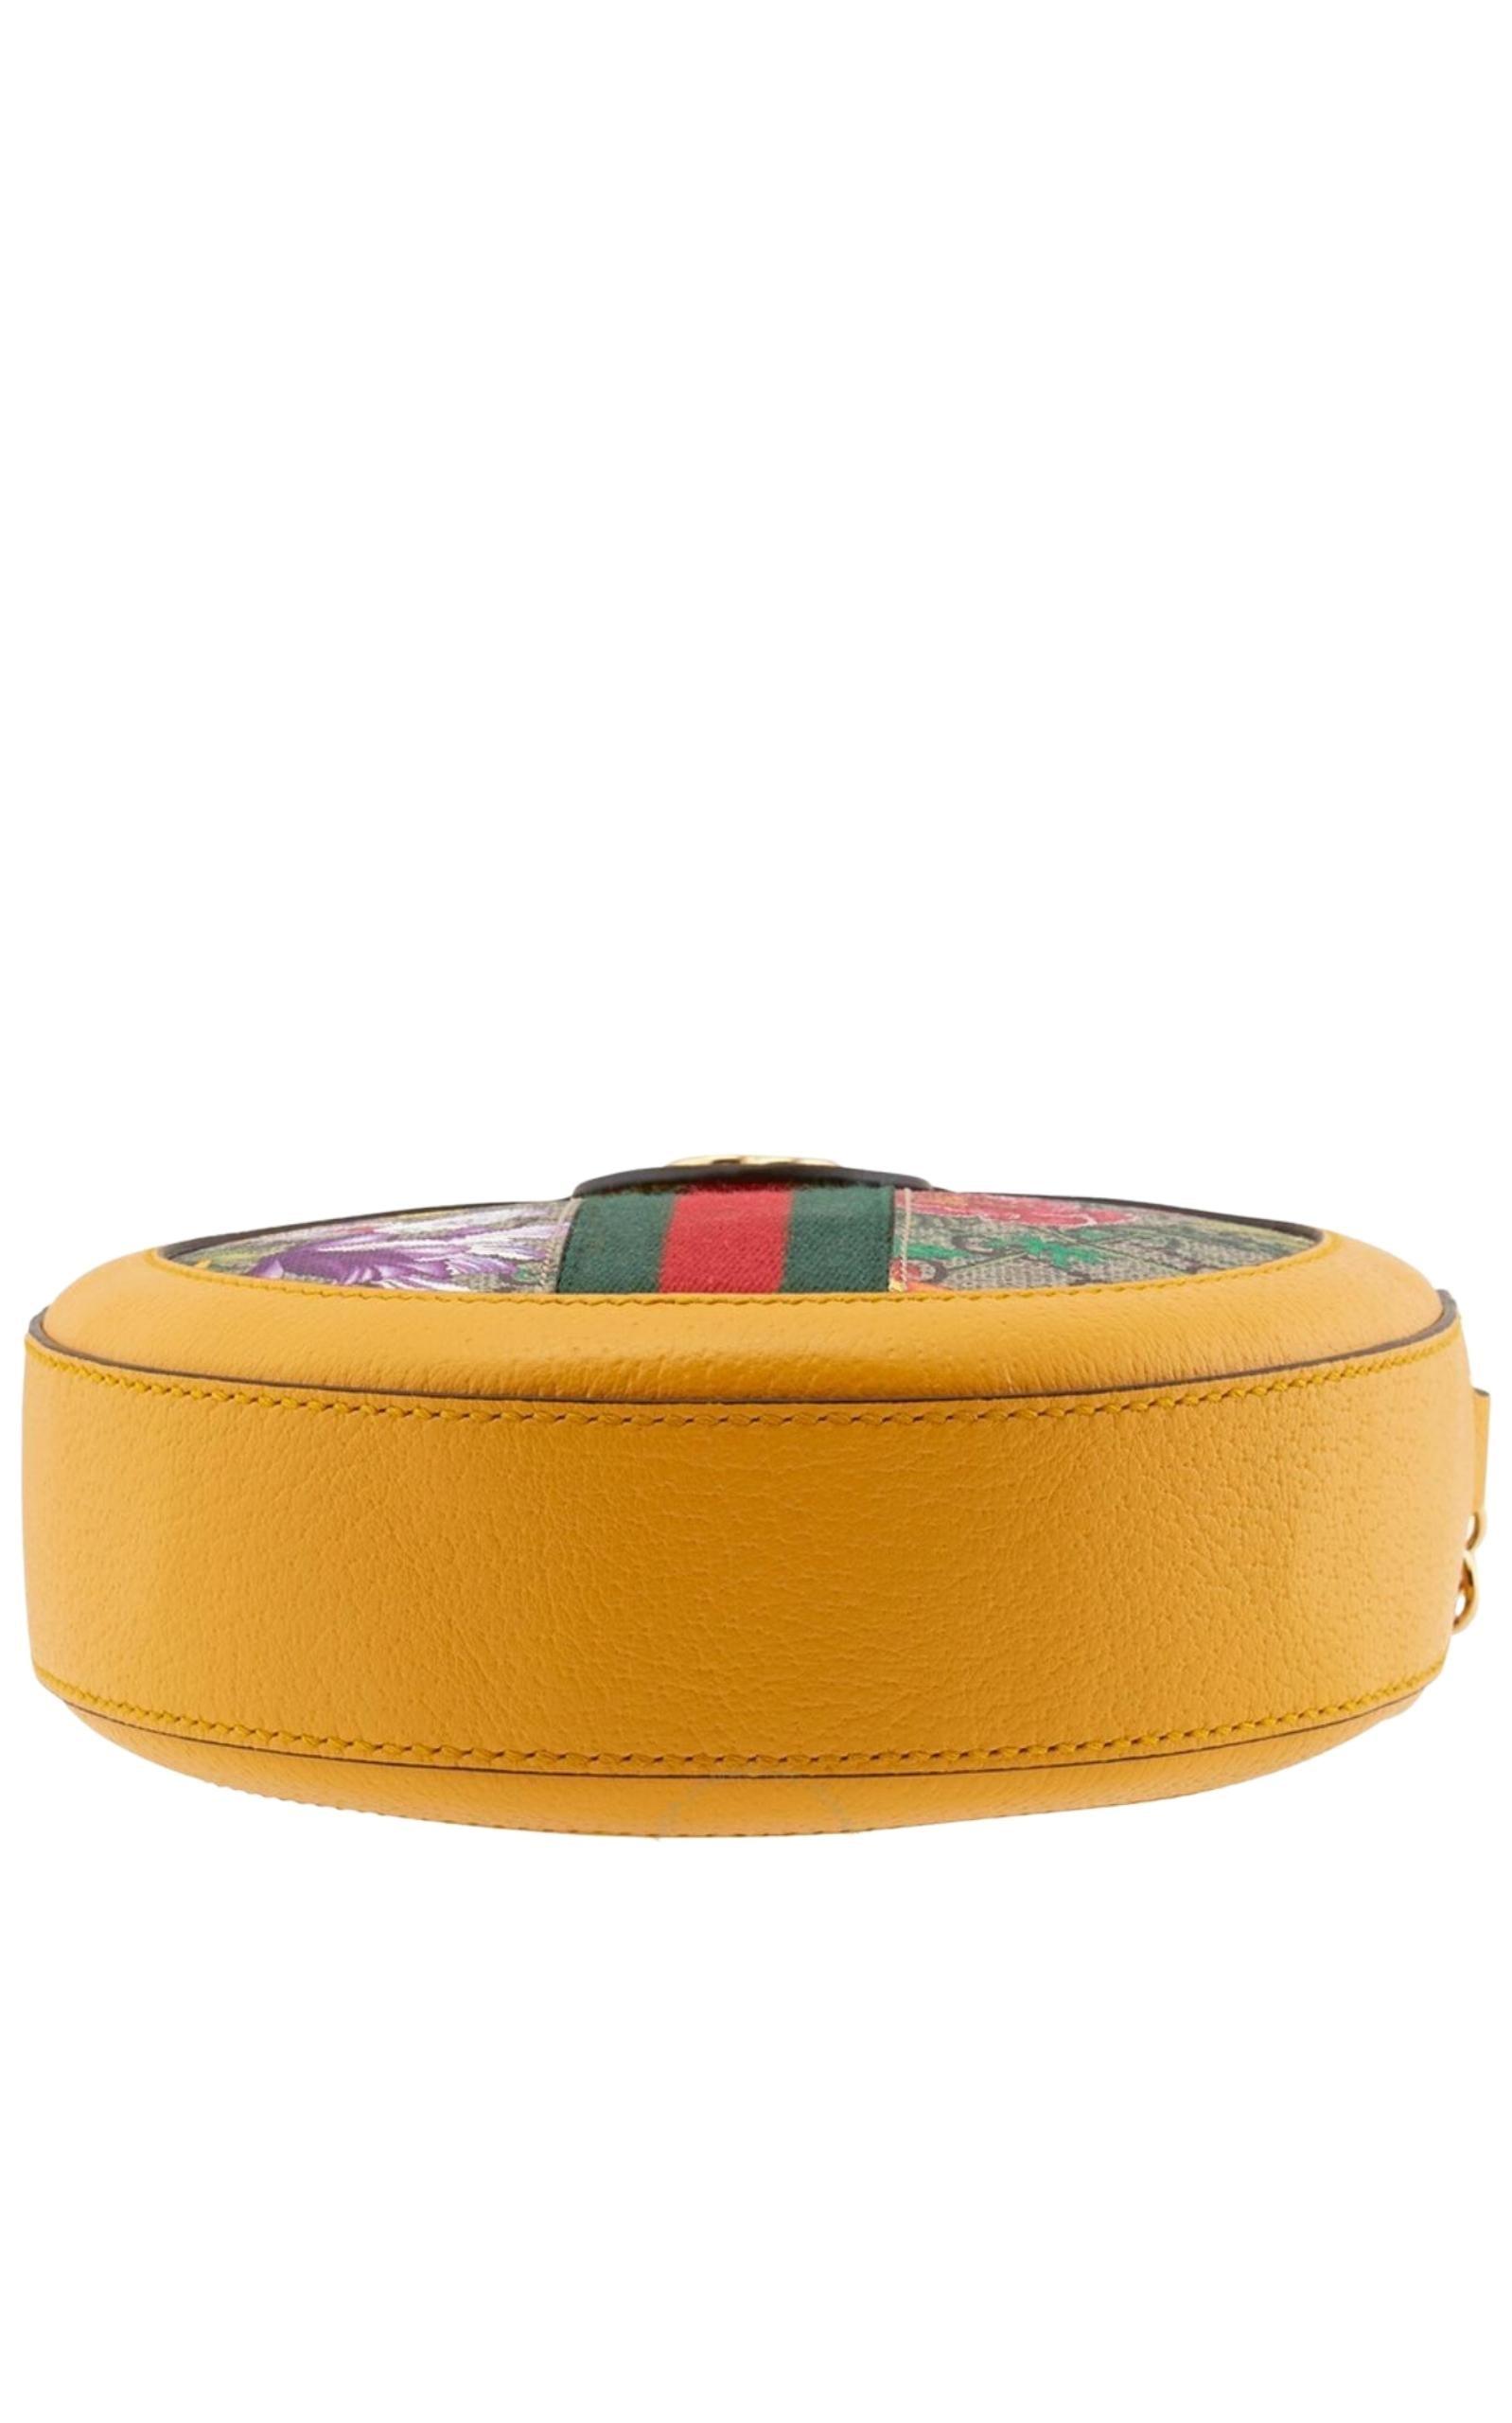 Authentic Gucci 499621 Ophidia Flora Dome Shoulder Bag, Handbag, Crossbody  NWT